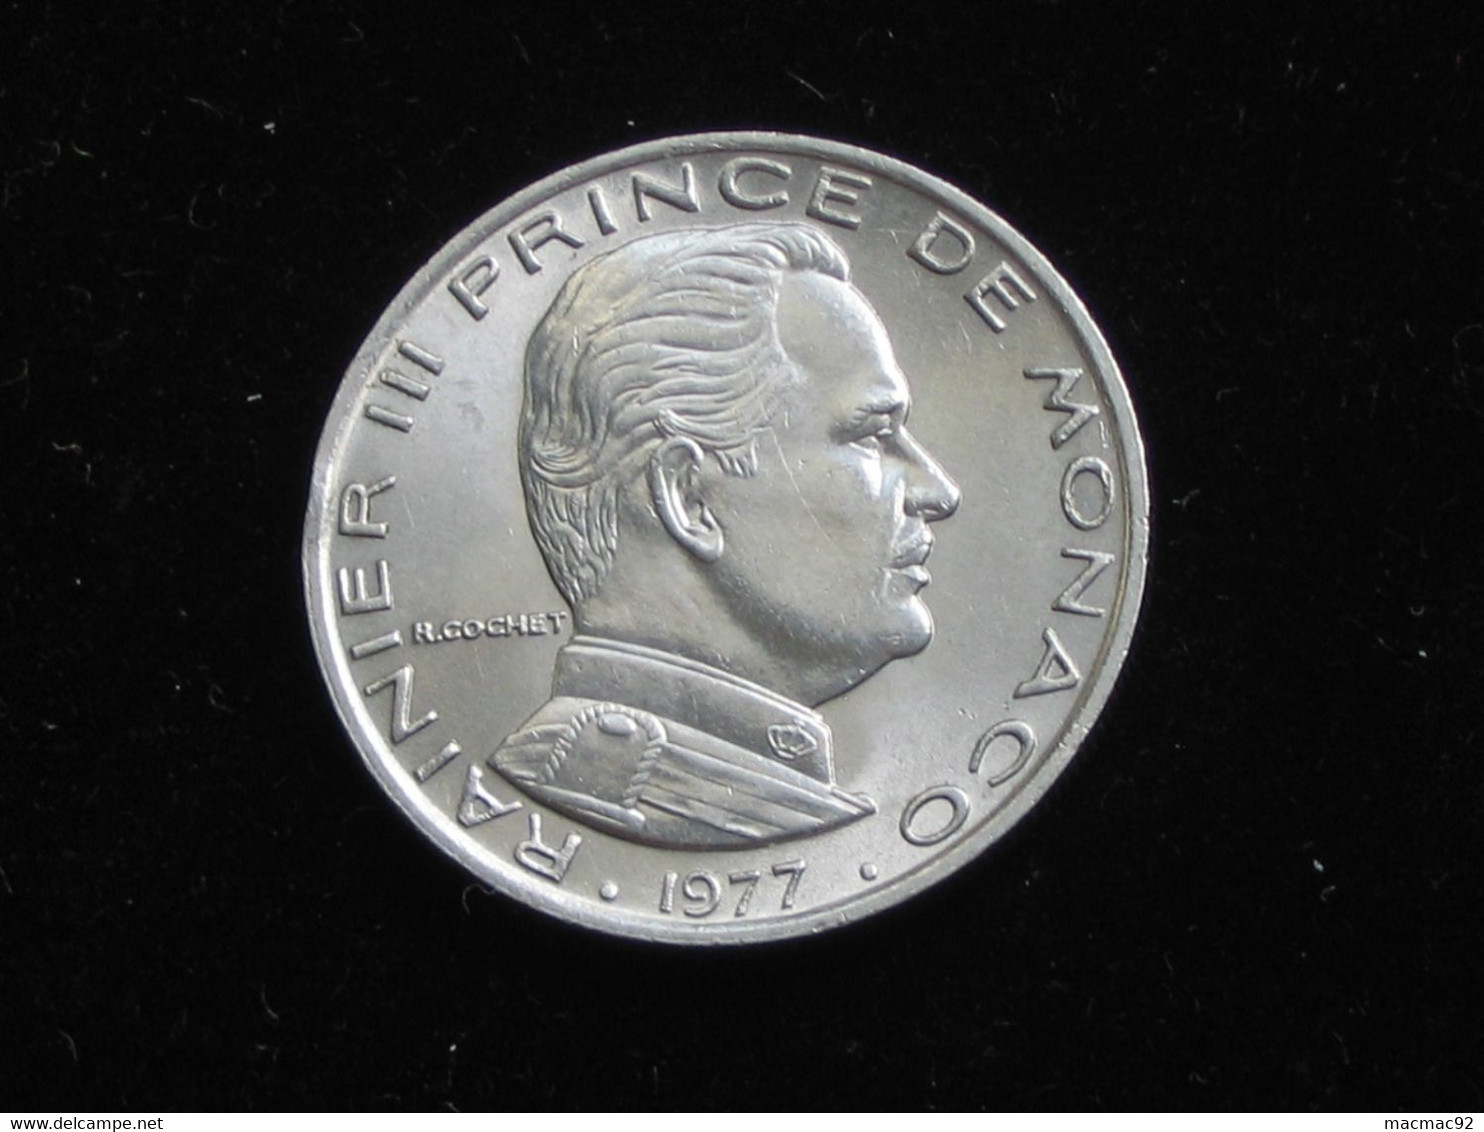 MONACO - 1 Franc 1977 - Rainier III Prince De Monaco **** EN ACHAT IMMEDIAT **** - 1949-1956 Franchi Antichi